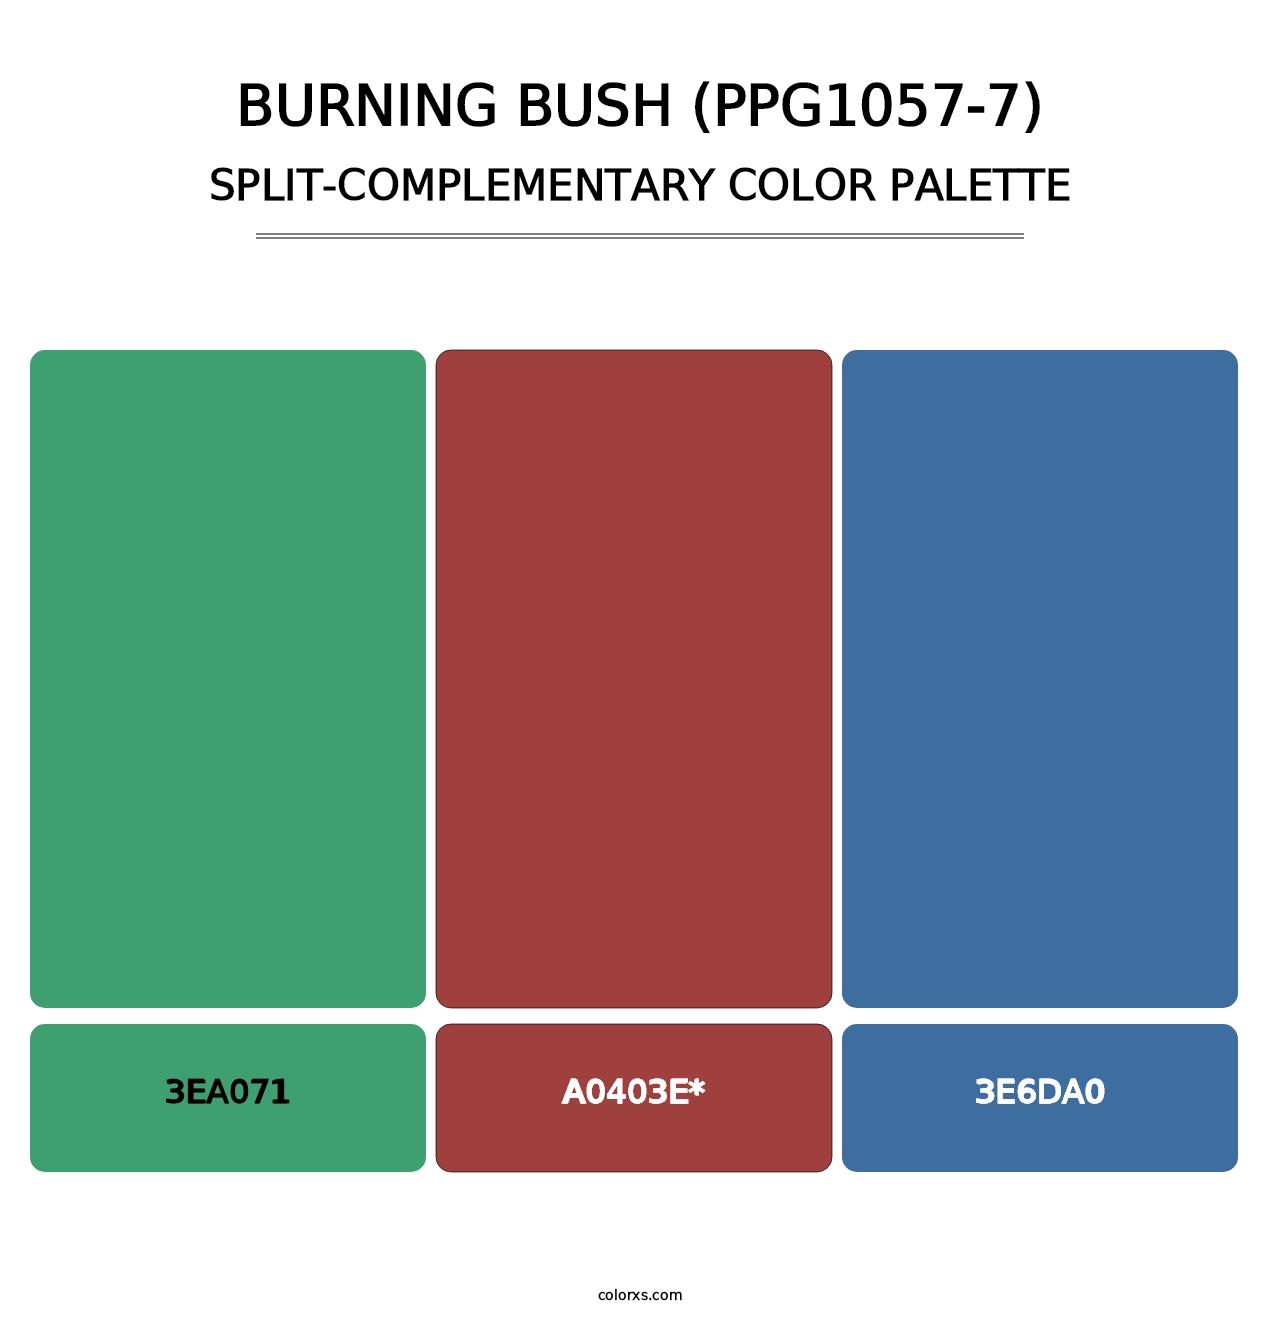 Burning Bush (PPG1057-7) - Split-Complementary Color Palette